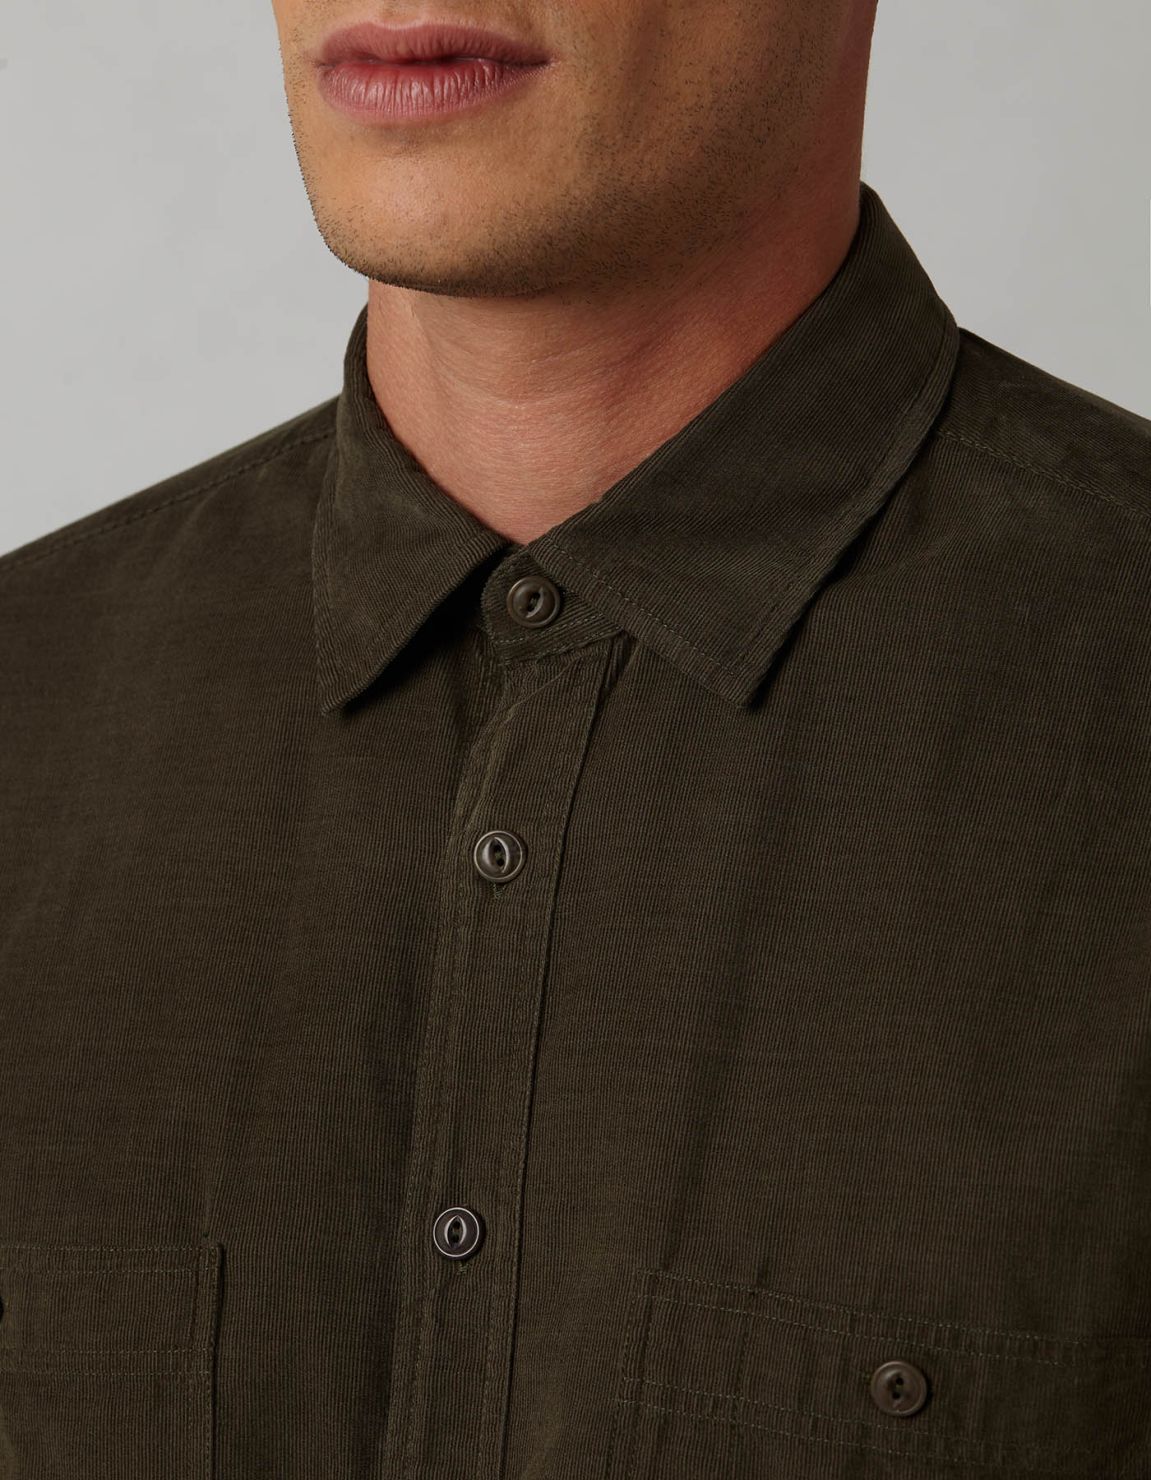 Green Velvet Solid colour Shirt Collar small spread Tailor Custom Fit 2